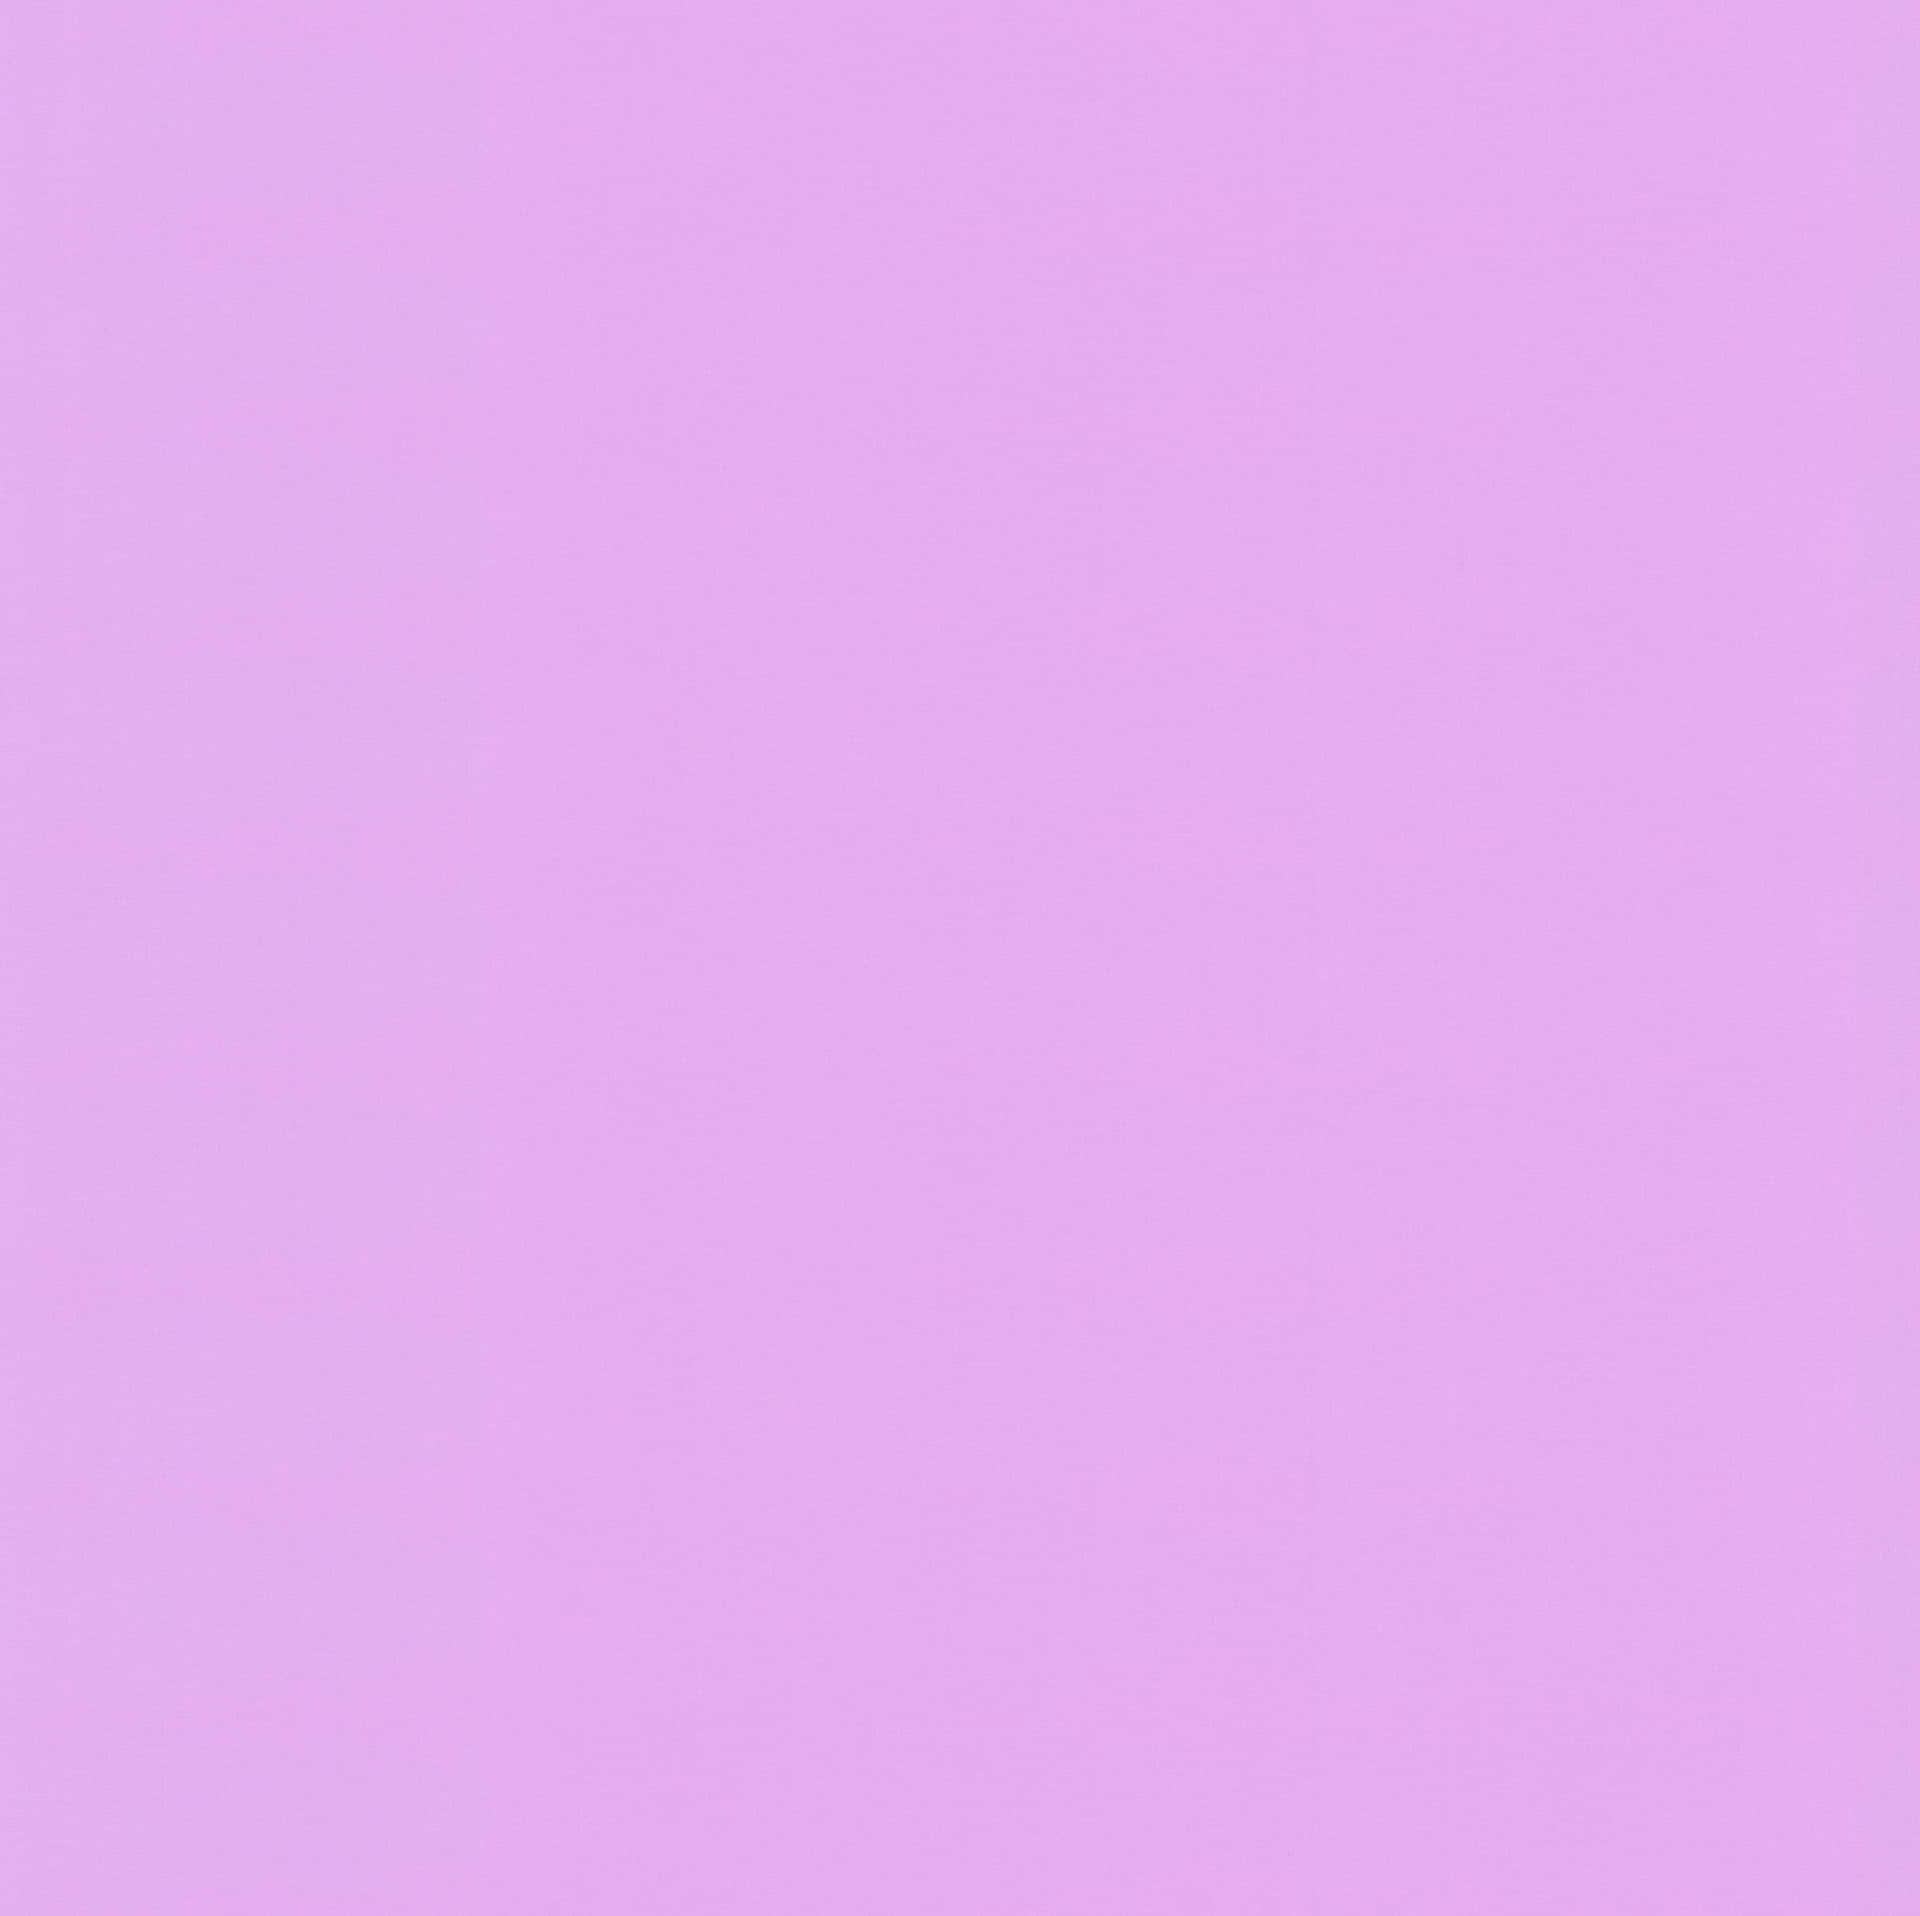 Pastel purple ( #b39eb5 ) - plain background image